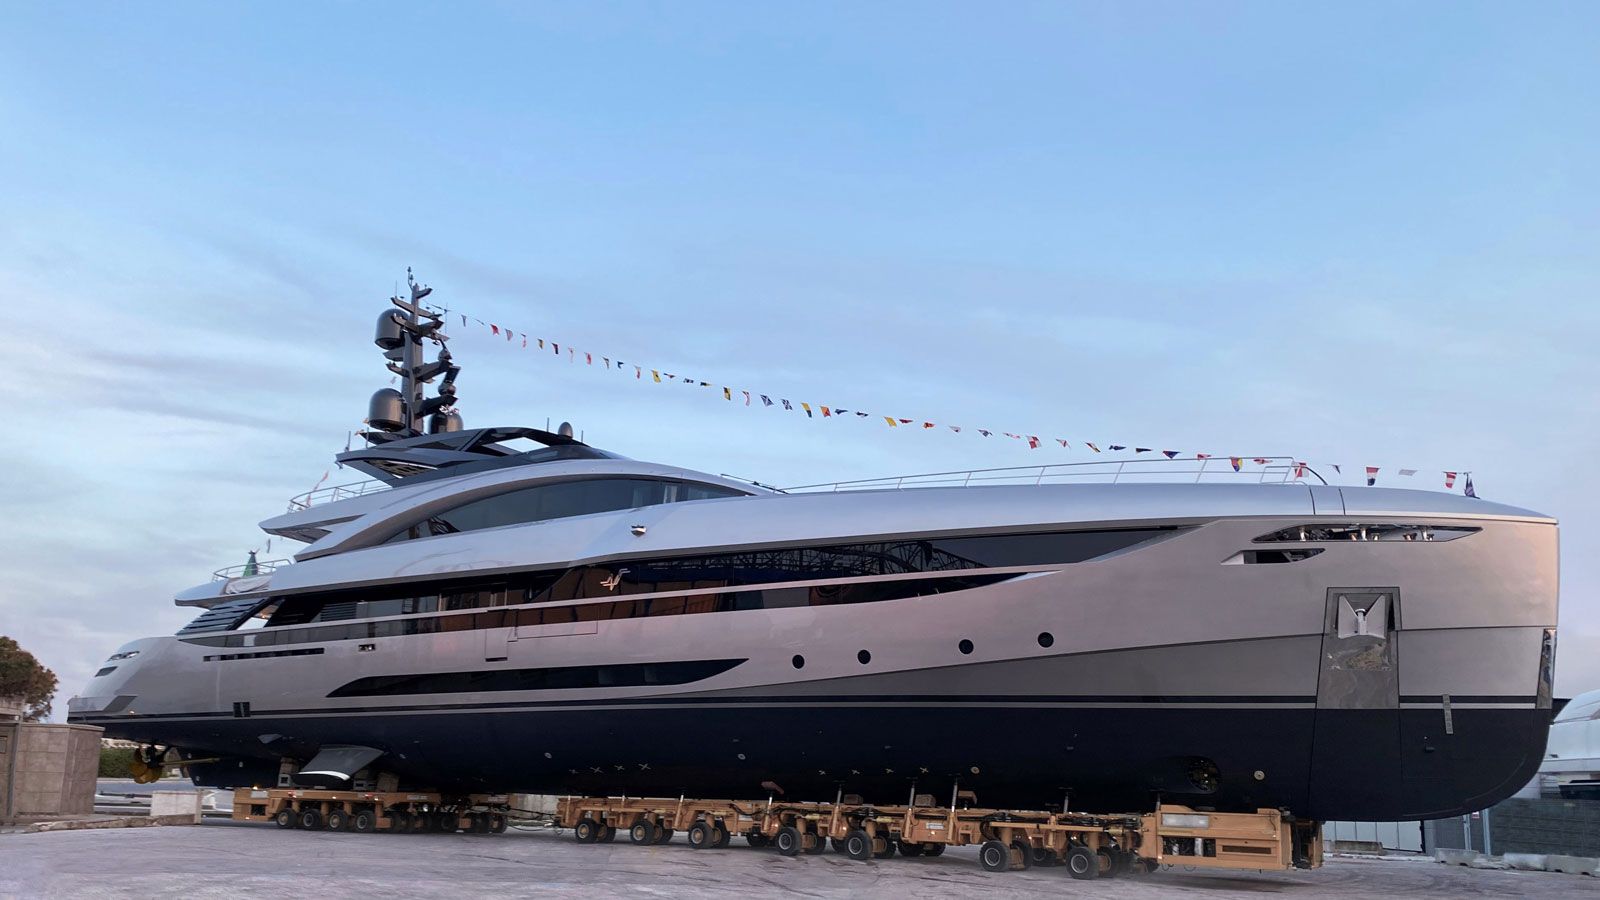 NO STRESS Luxury Super Yacht Rossinavi